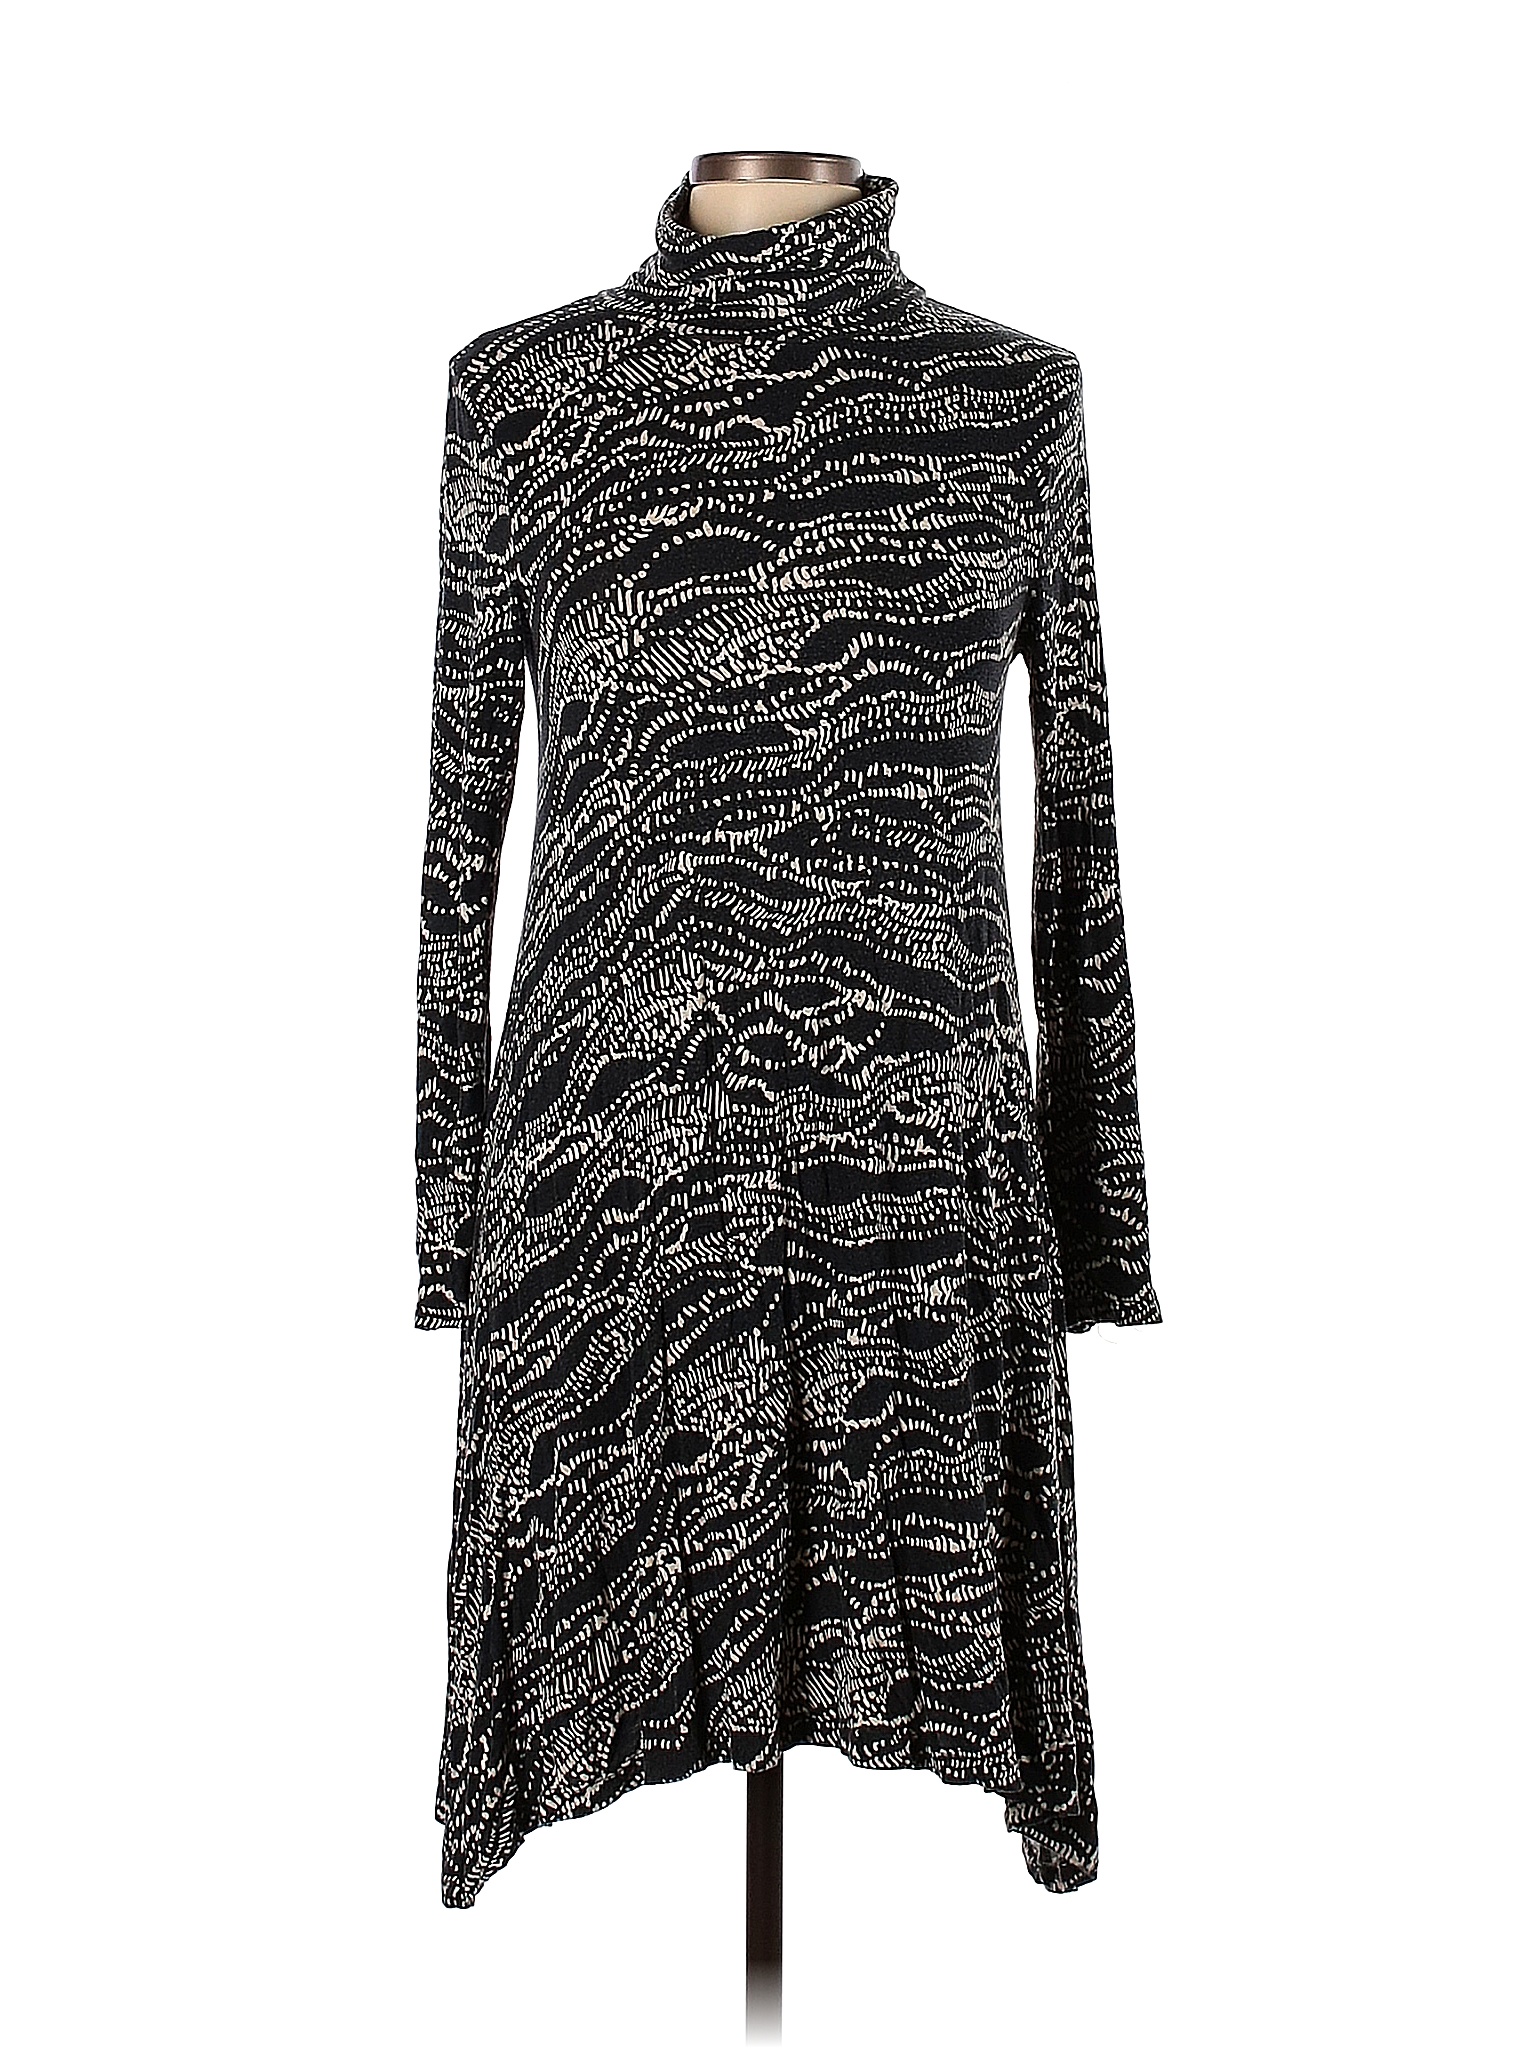 Maeve Animal Print Gray Casual Dress Size L - 76% off | thredUP